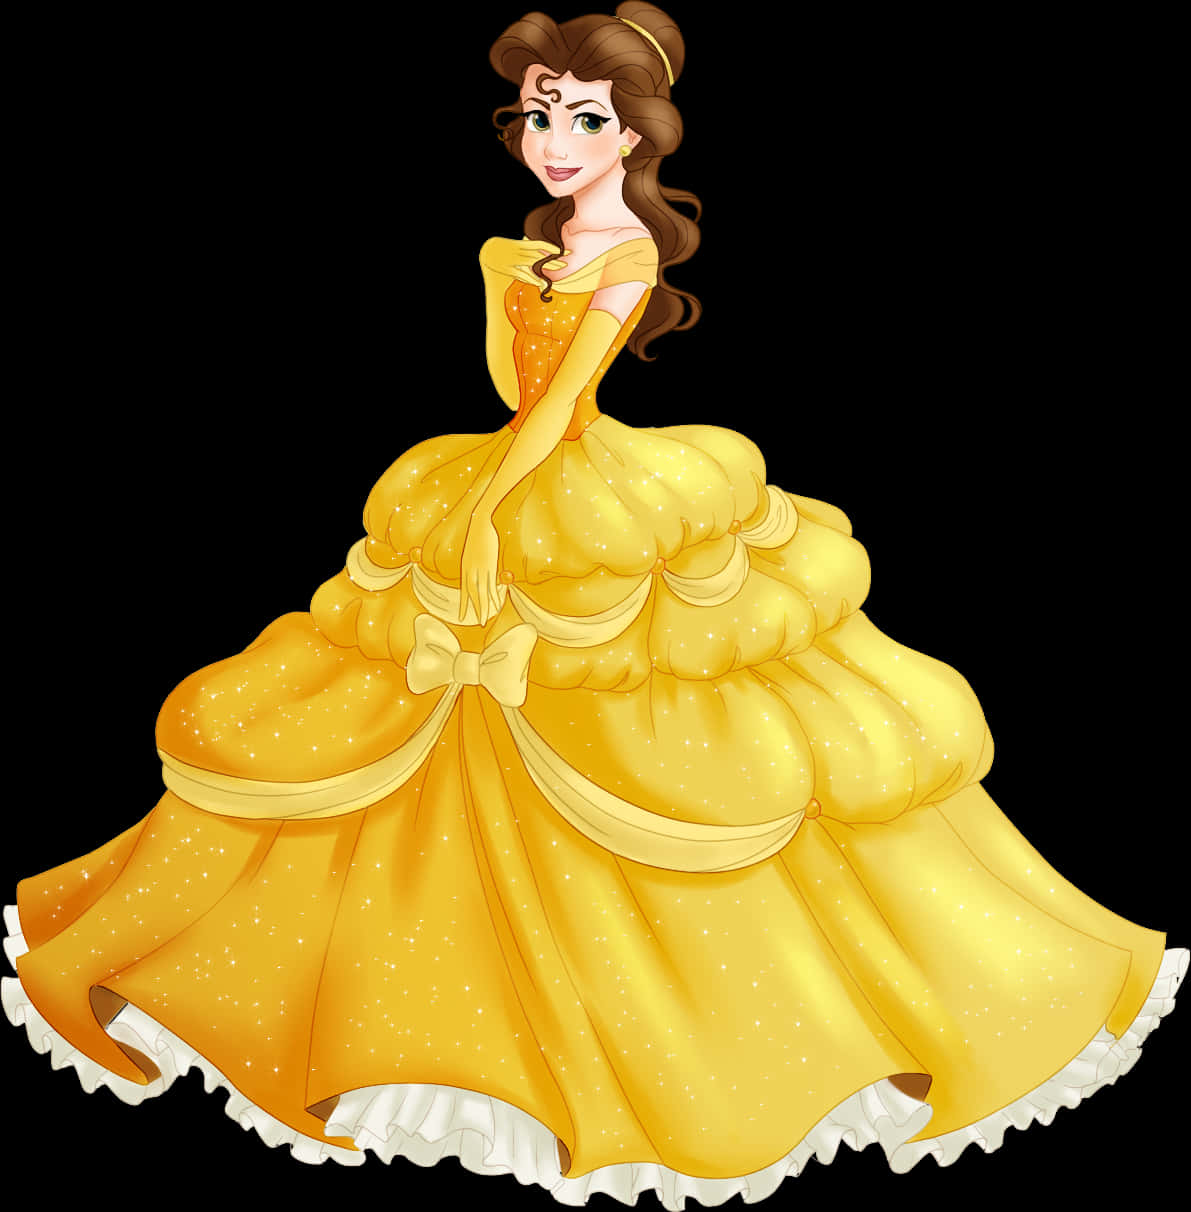 Disney Princess Belle In Yellow Dress